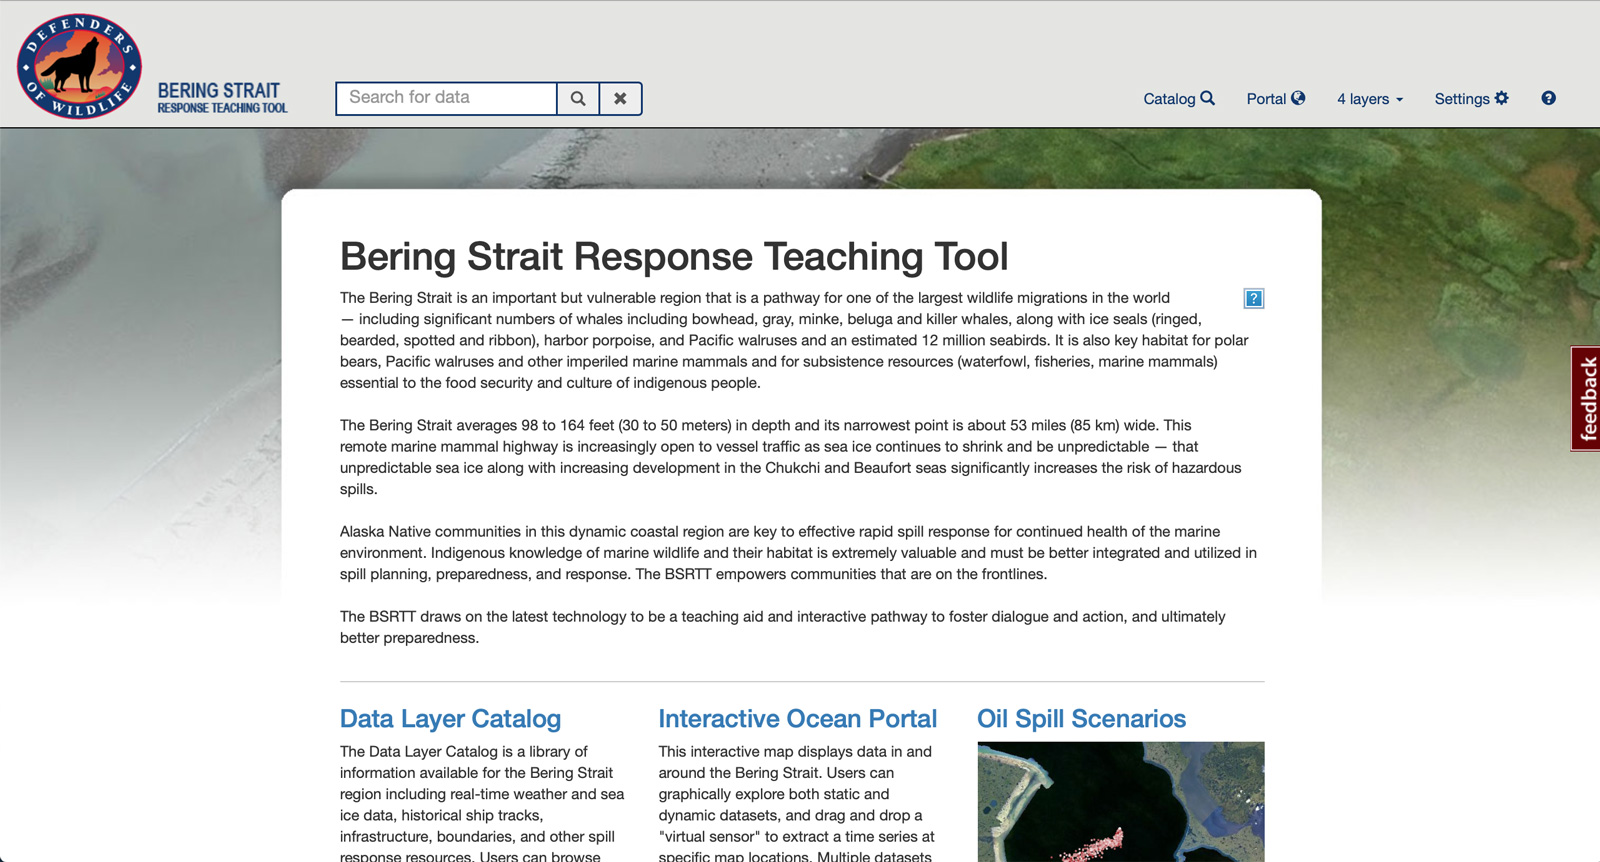 Screen grab of bering strait response teaching tool page in AOOS data portal.